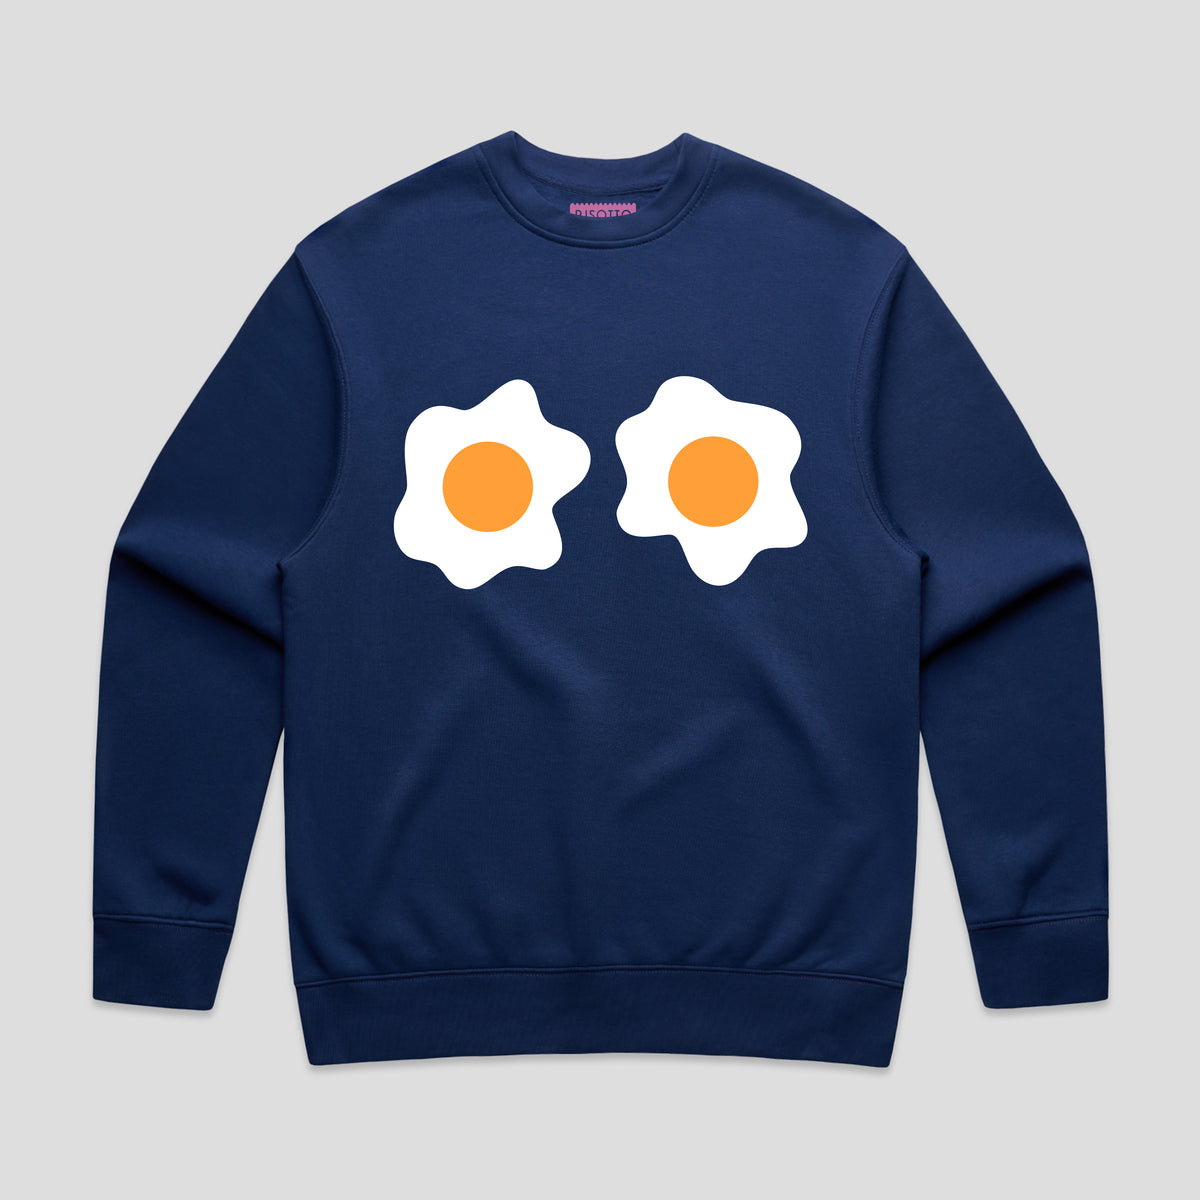 Eggs - Cobalt Heavyweight Sweatshirt